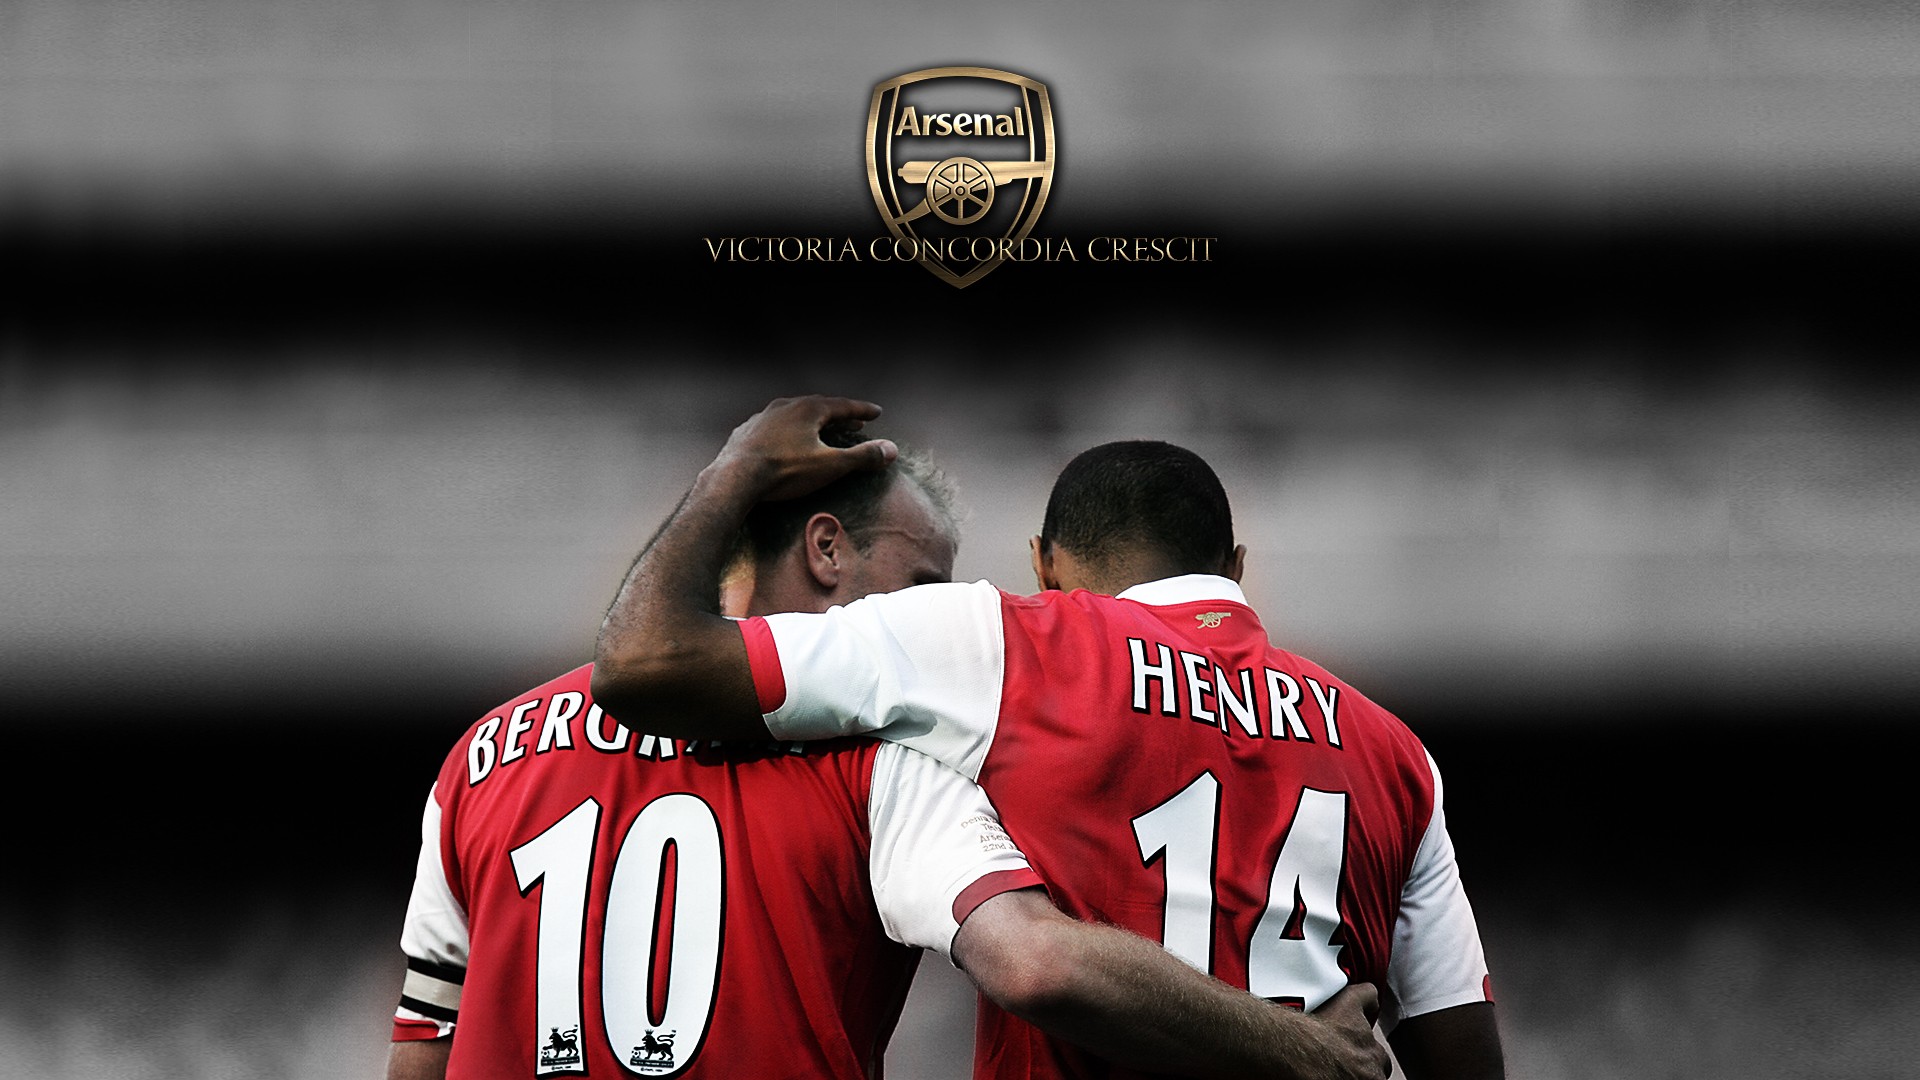 Arsenal Fc London Thierry Henry Dennis Bergkamp Soccer Clubs Legend Gunners 1920x1080